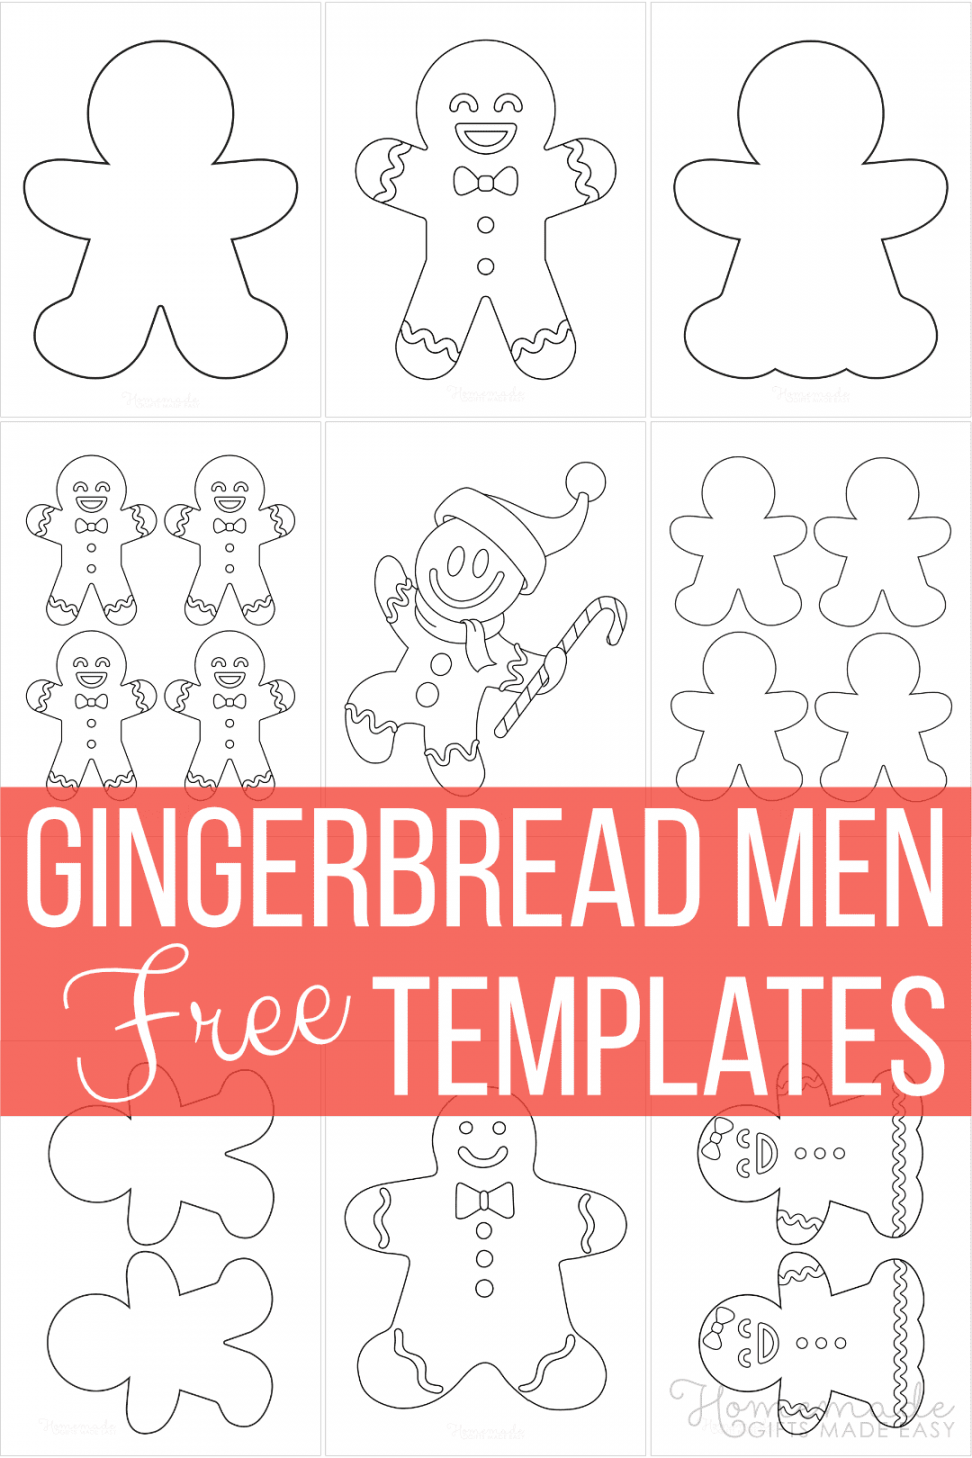 Free Printable Gingerbread Man Templates & Coloring Pages - FREE Printables - Printable Gingerbread Man